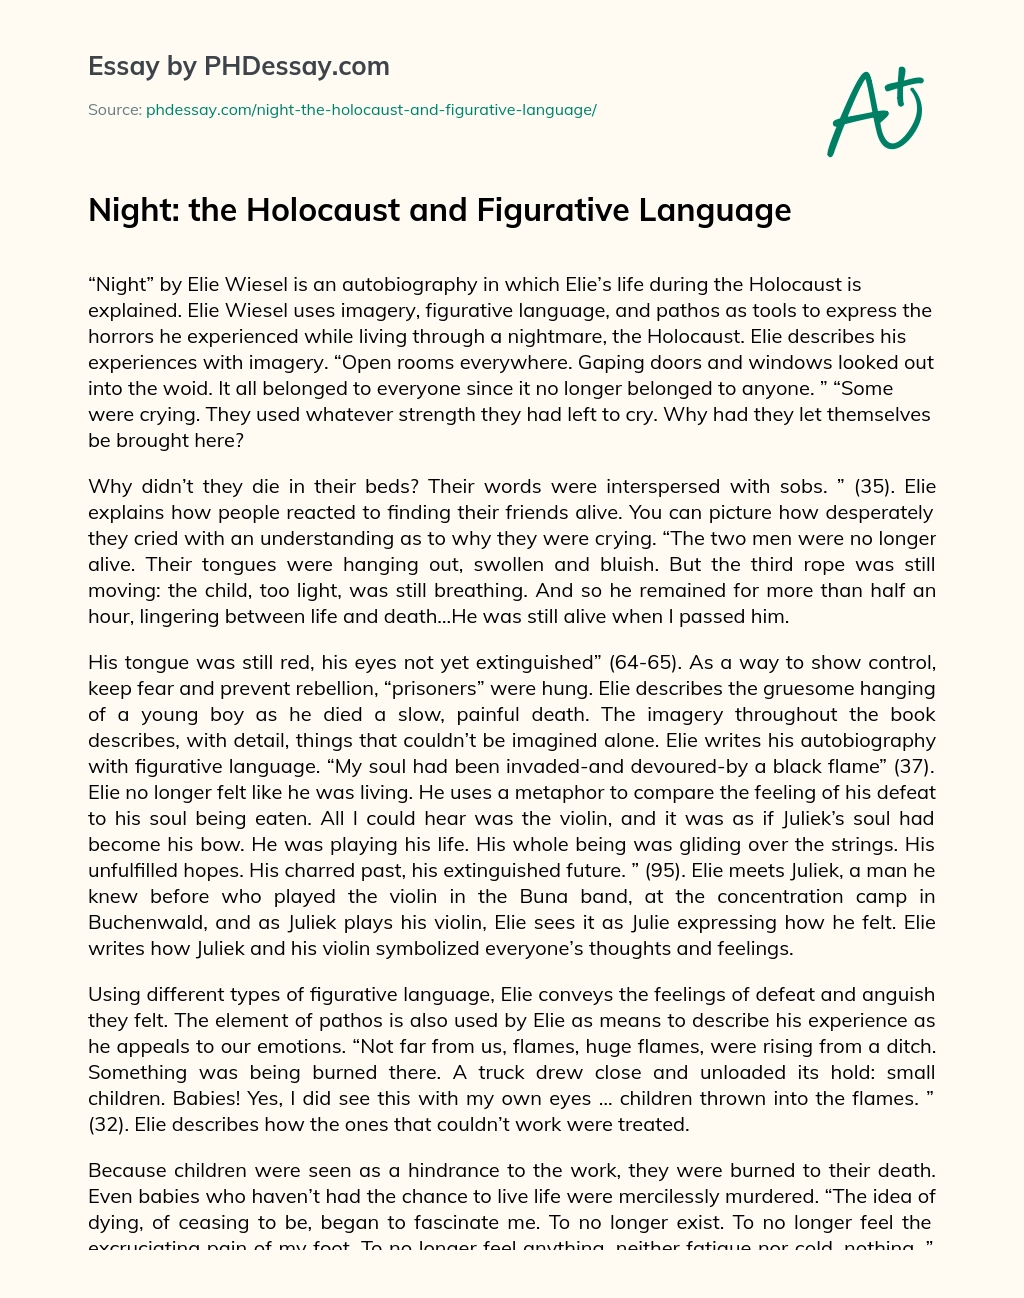 Night: the Holocaust and Figurative Language essay